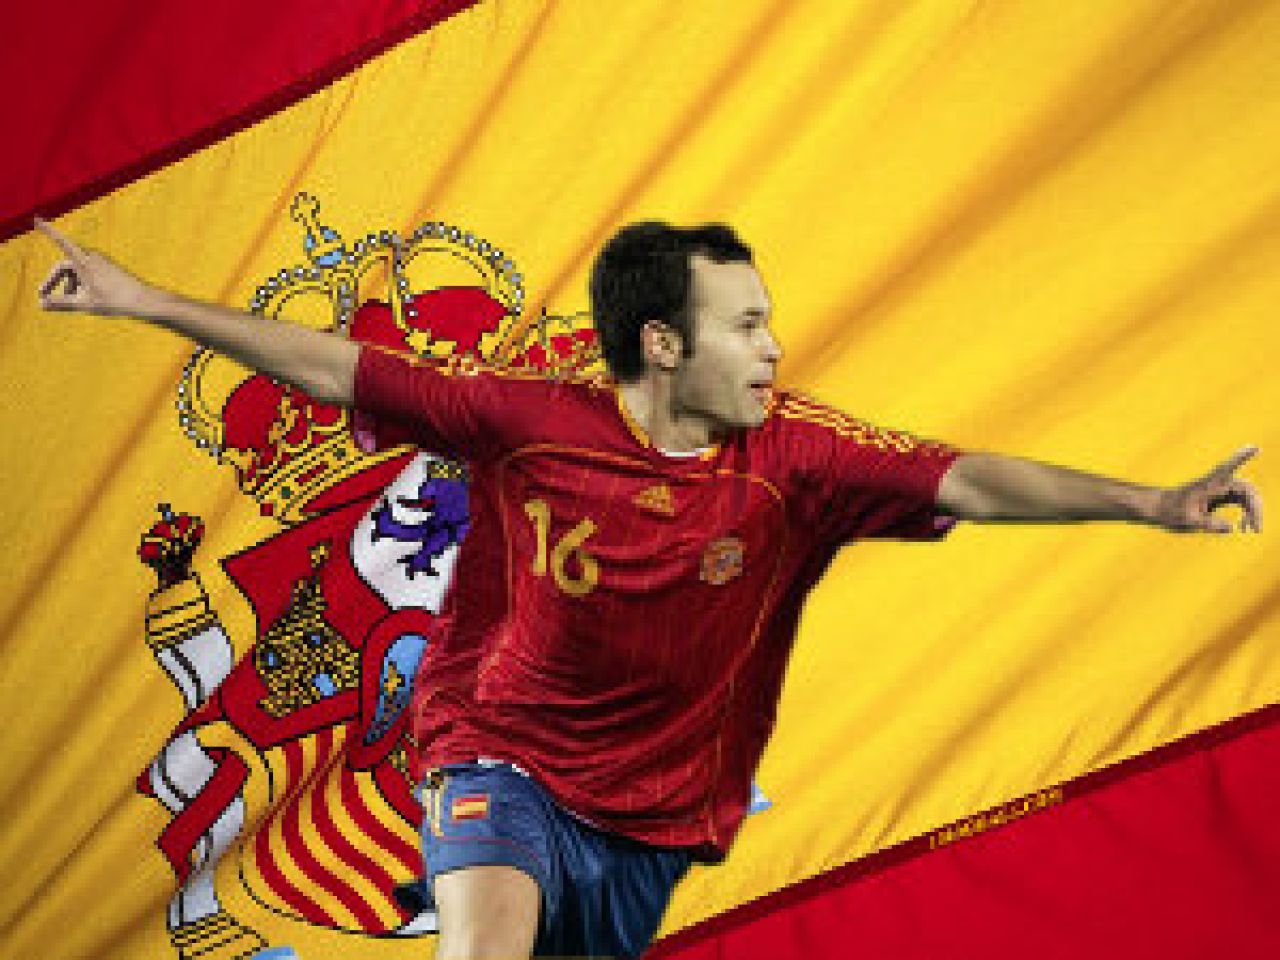 Andres Iniesta-bohater reprezentacji Hiszpanii